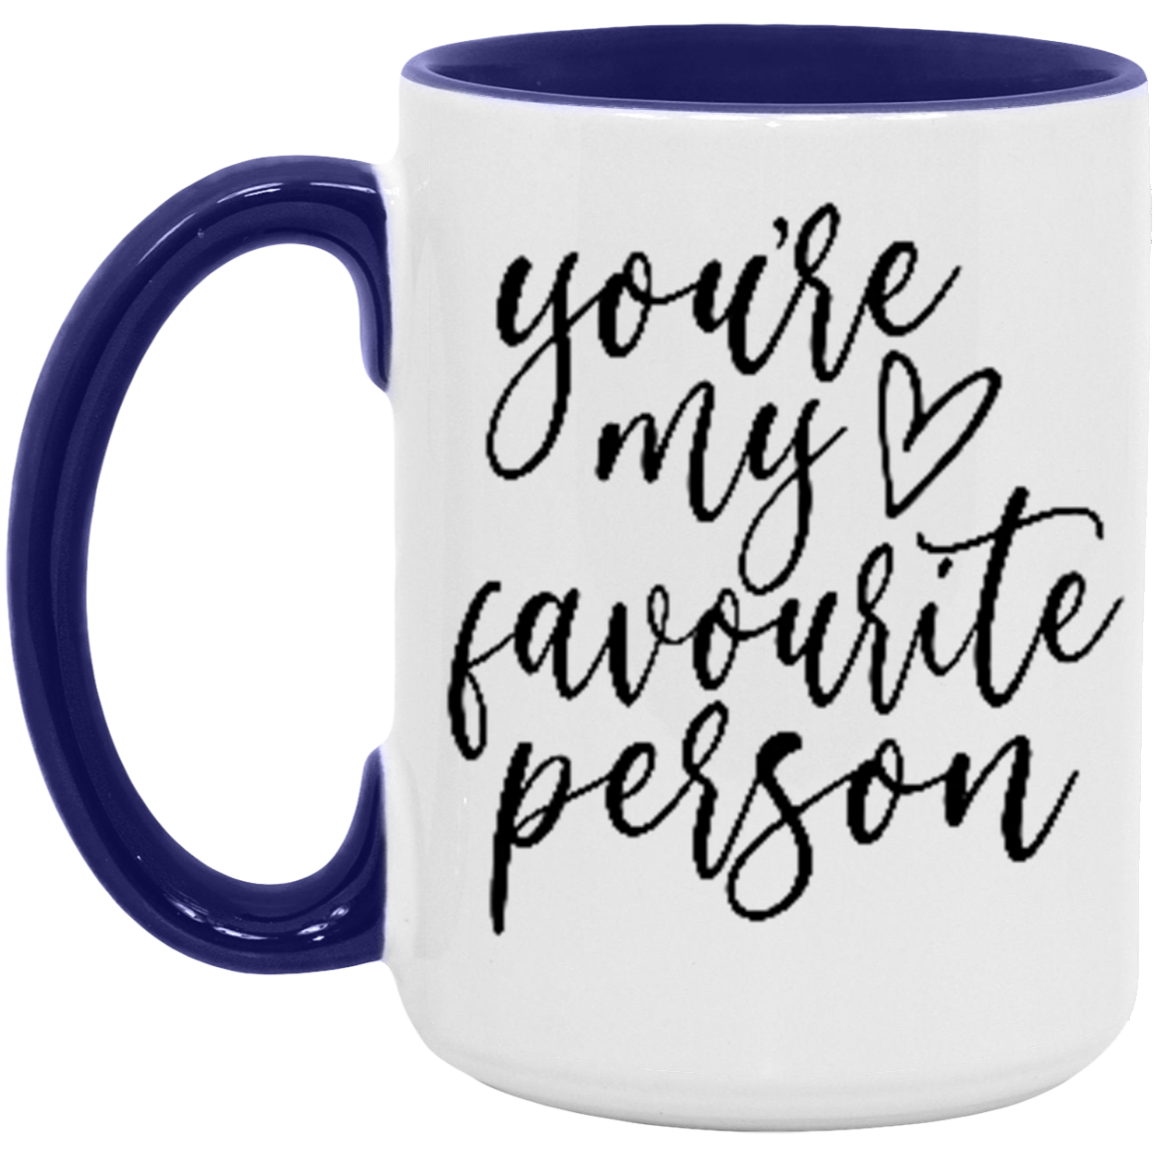 You're My Favourite Person Mug